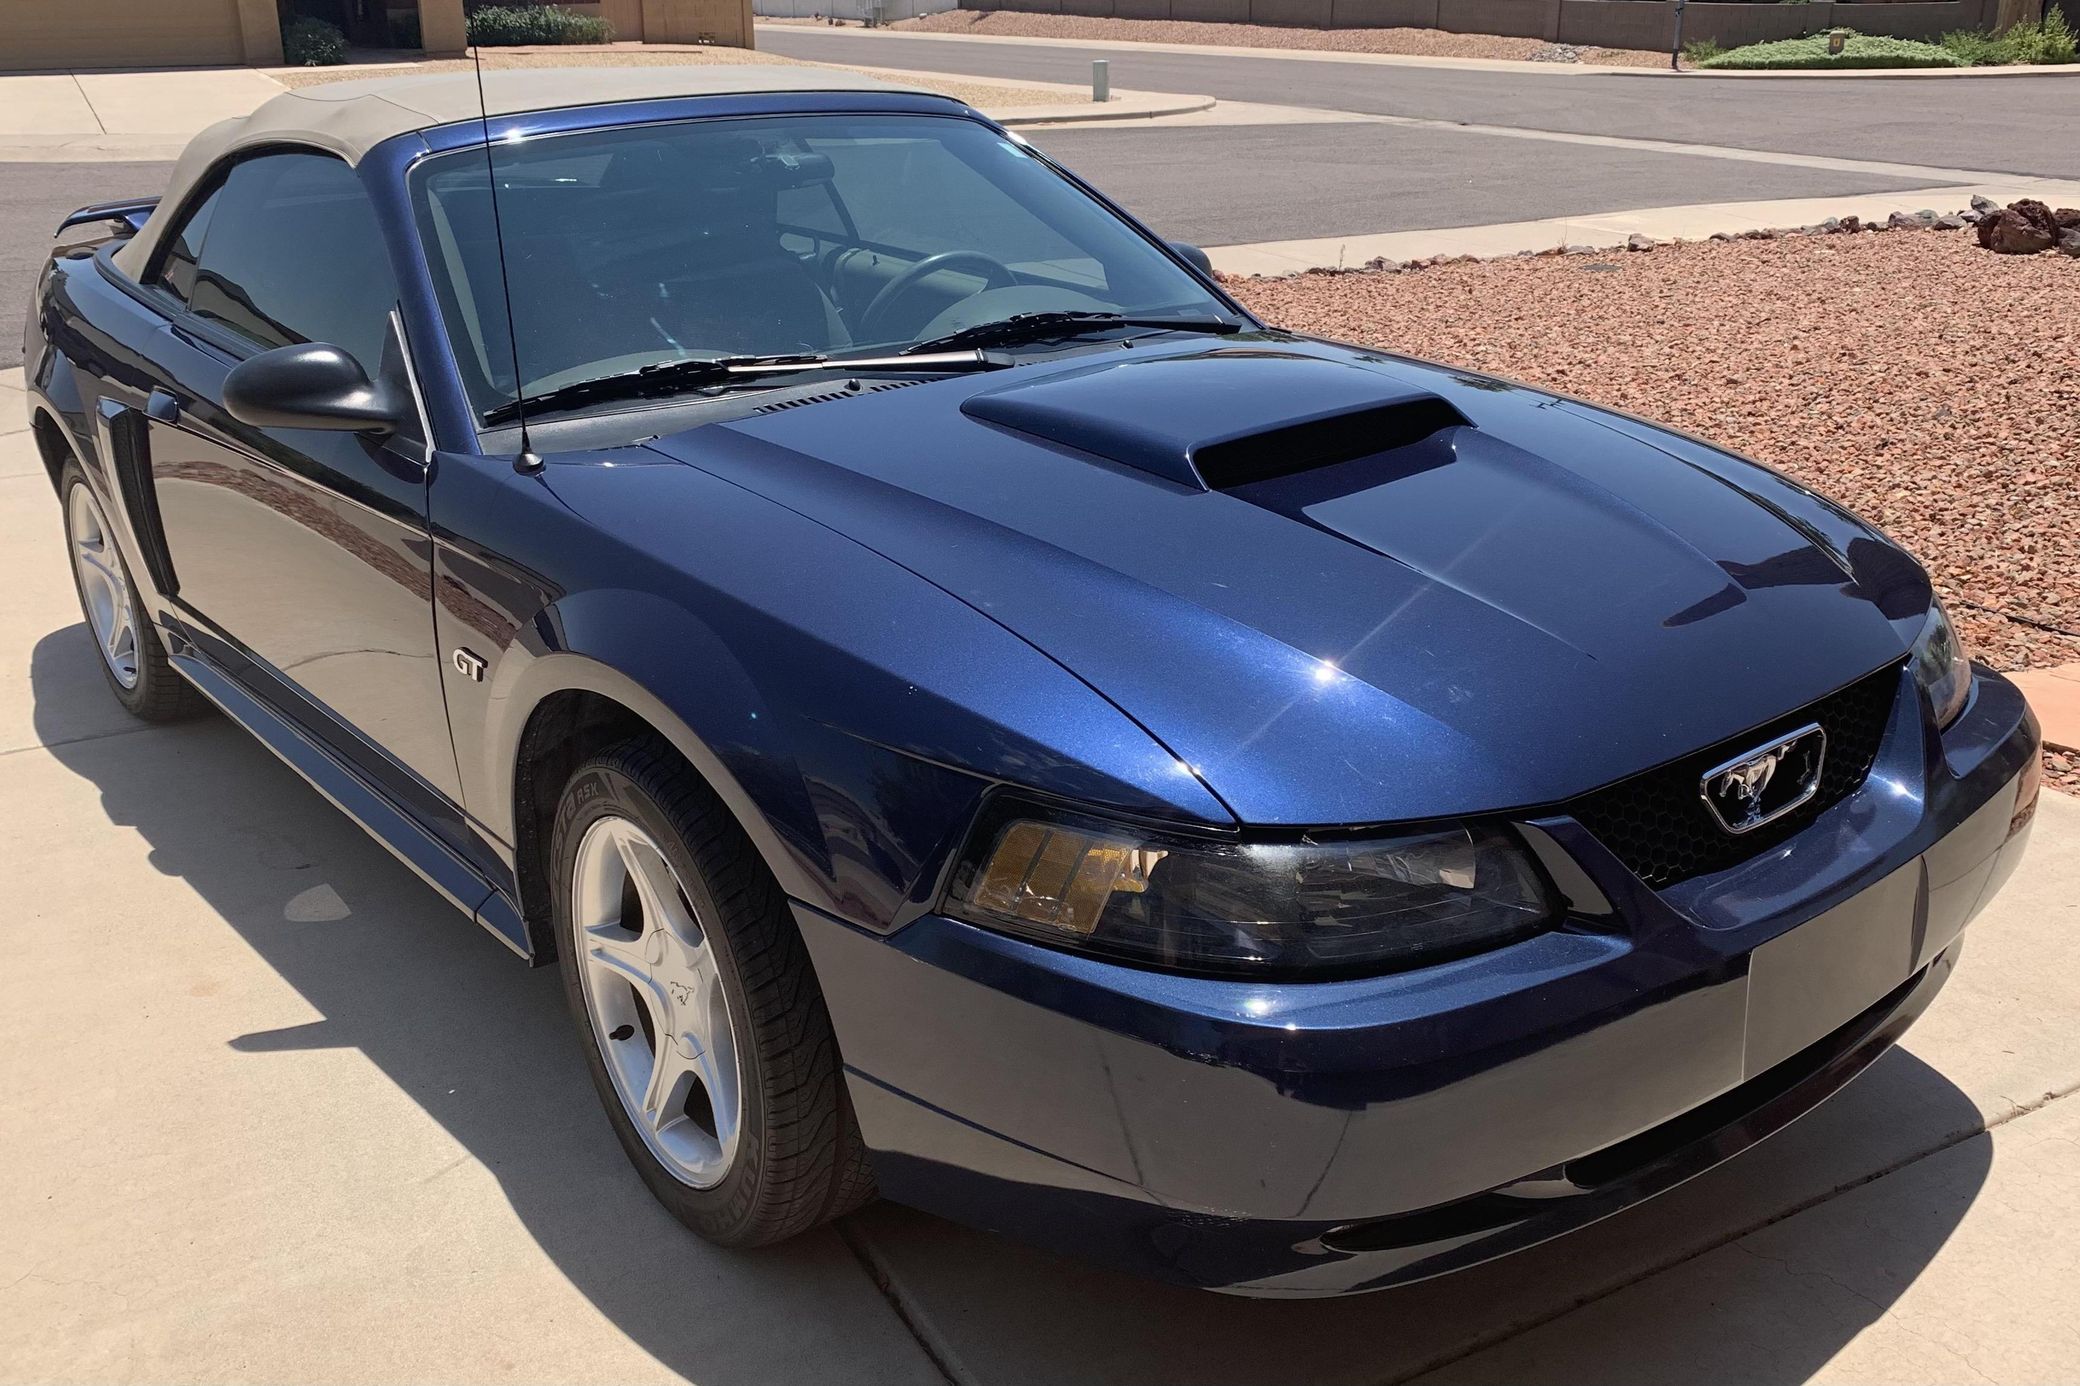 True Blue 2001 Ford Mustang